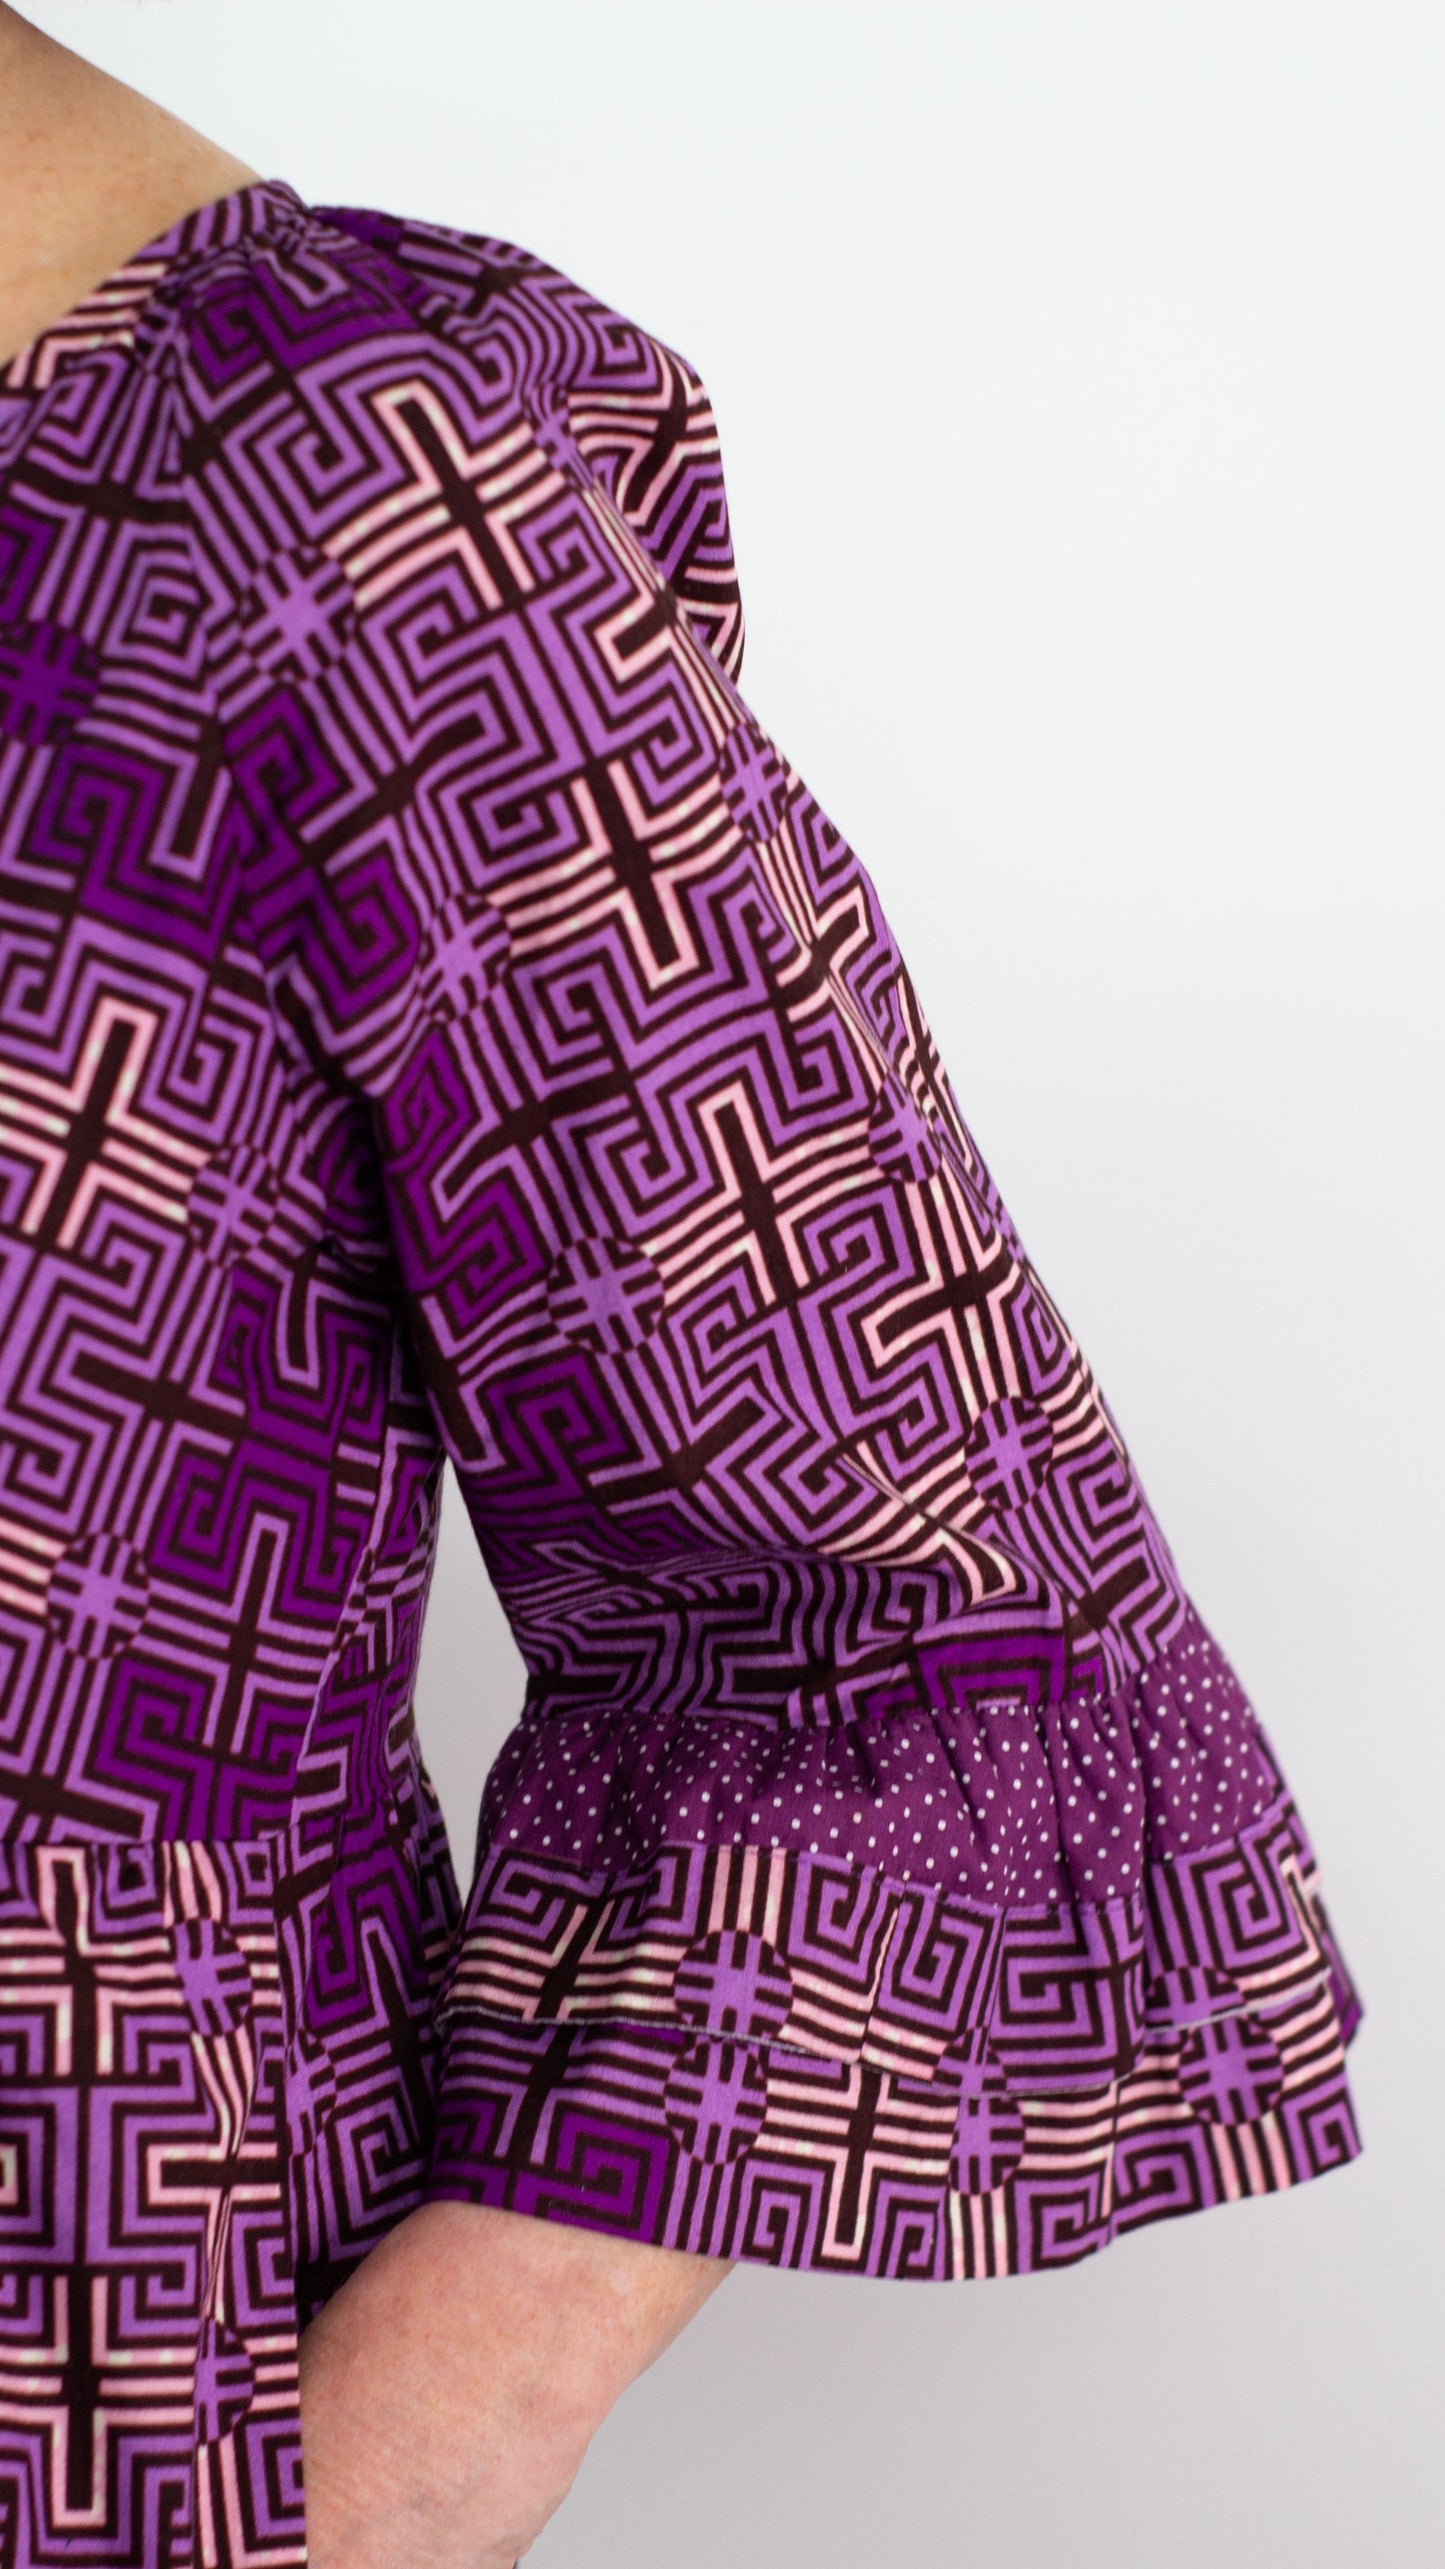 Dawn African Print Ruffle Dress